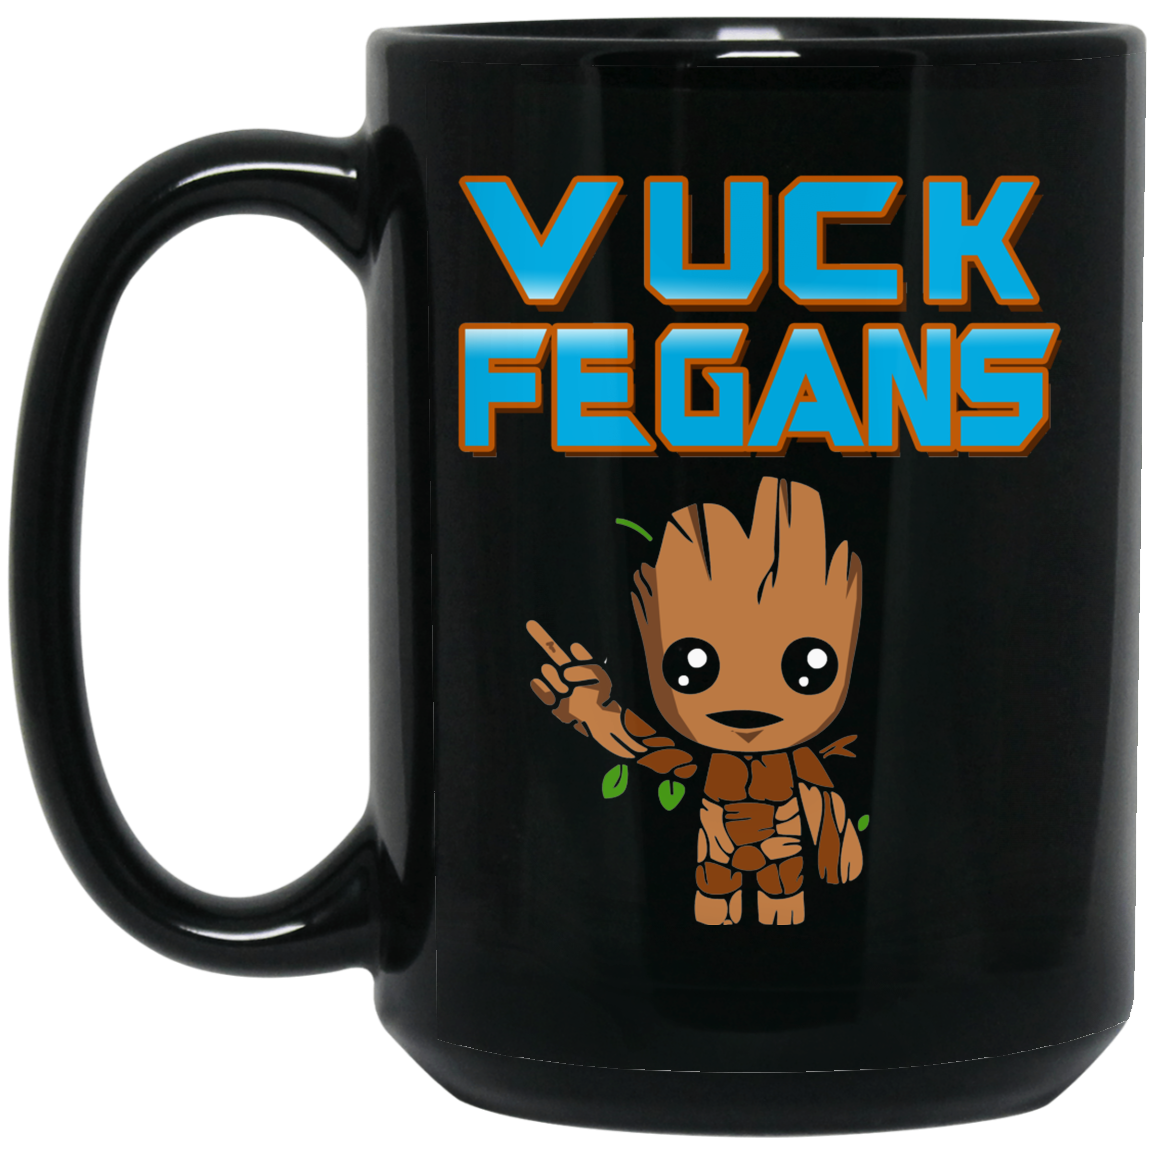 ArtichokeUSA Custom Design. Vuck Fegans. 85% Go Back Anyway. Groot Fan Art. 15 oz. Black Mug